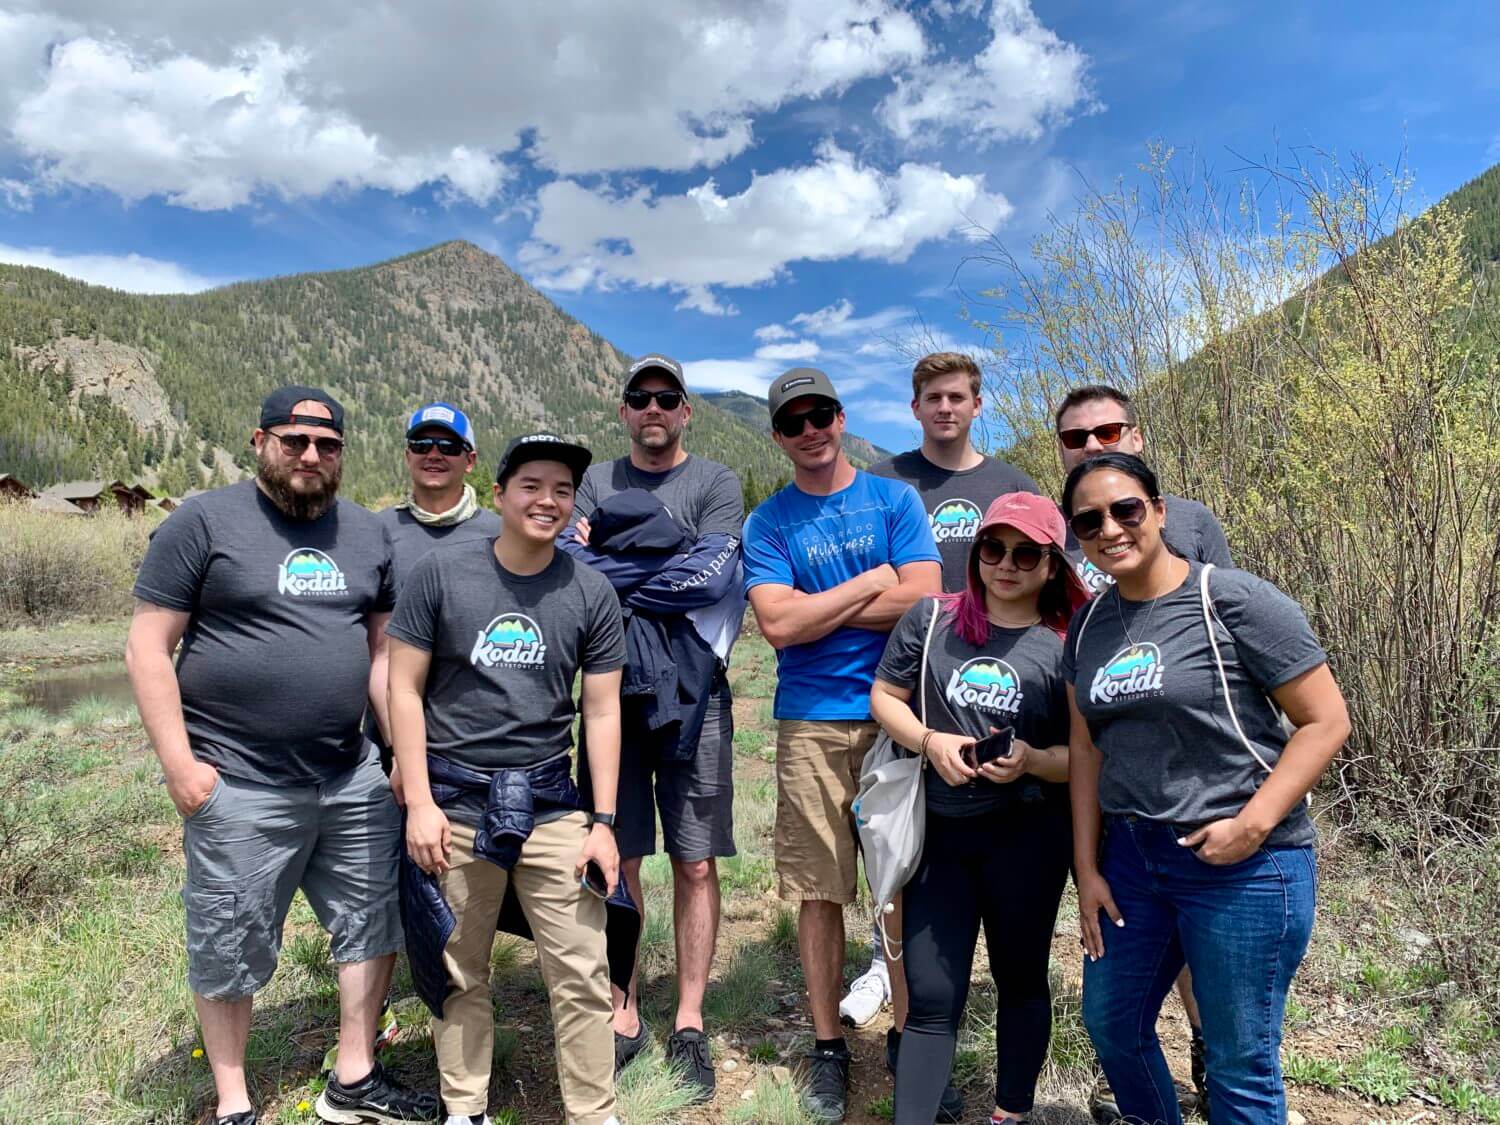 Koddi Team in the Rocky Mountains